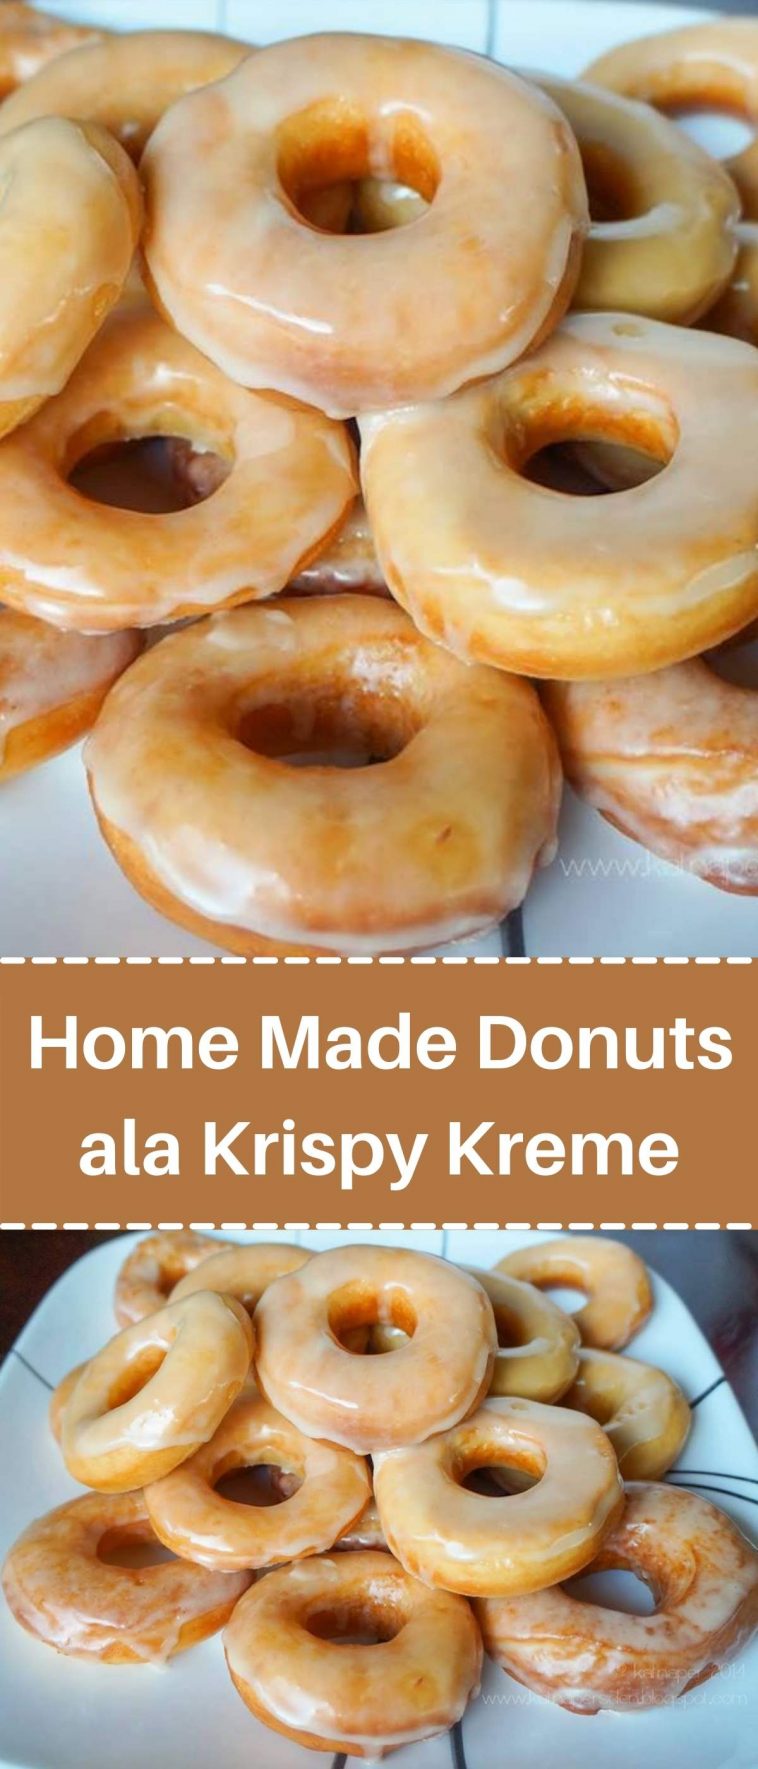 Home Made Donuts ala Krispy Kreme